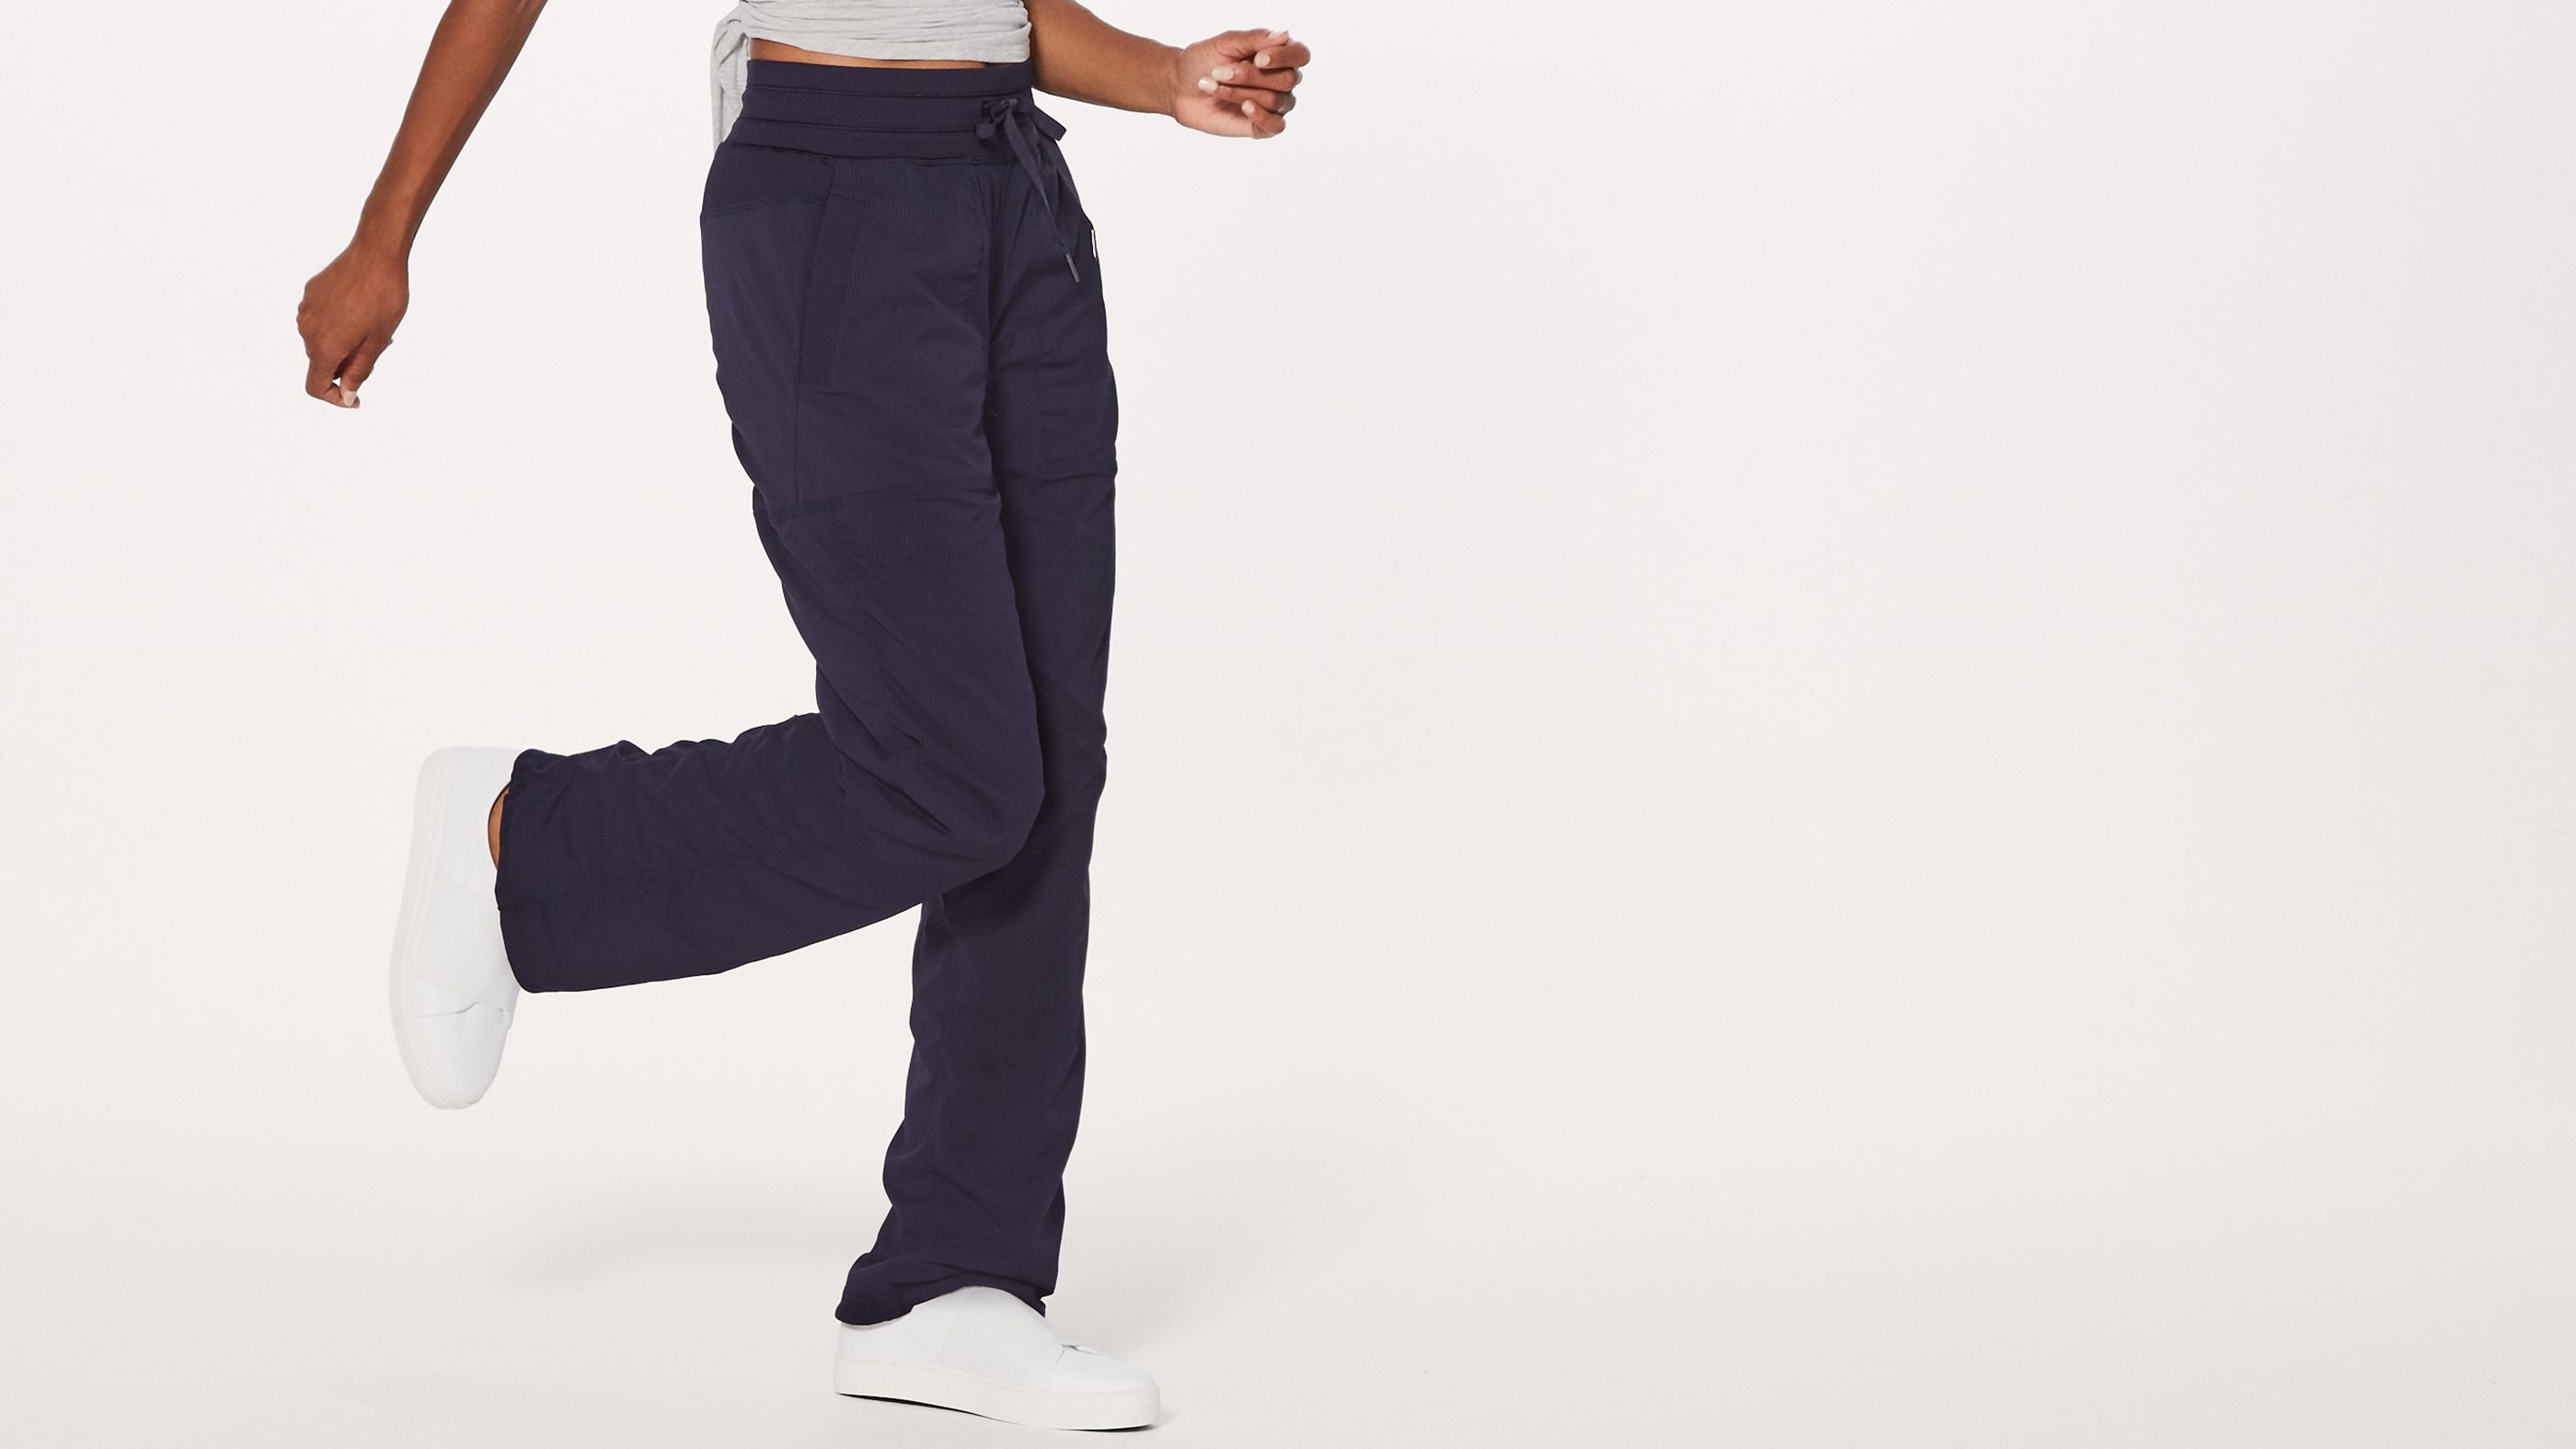 dance studio pants lined